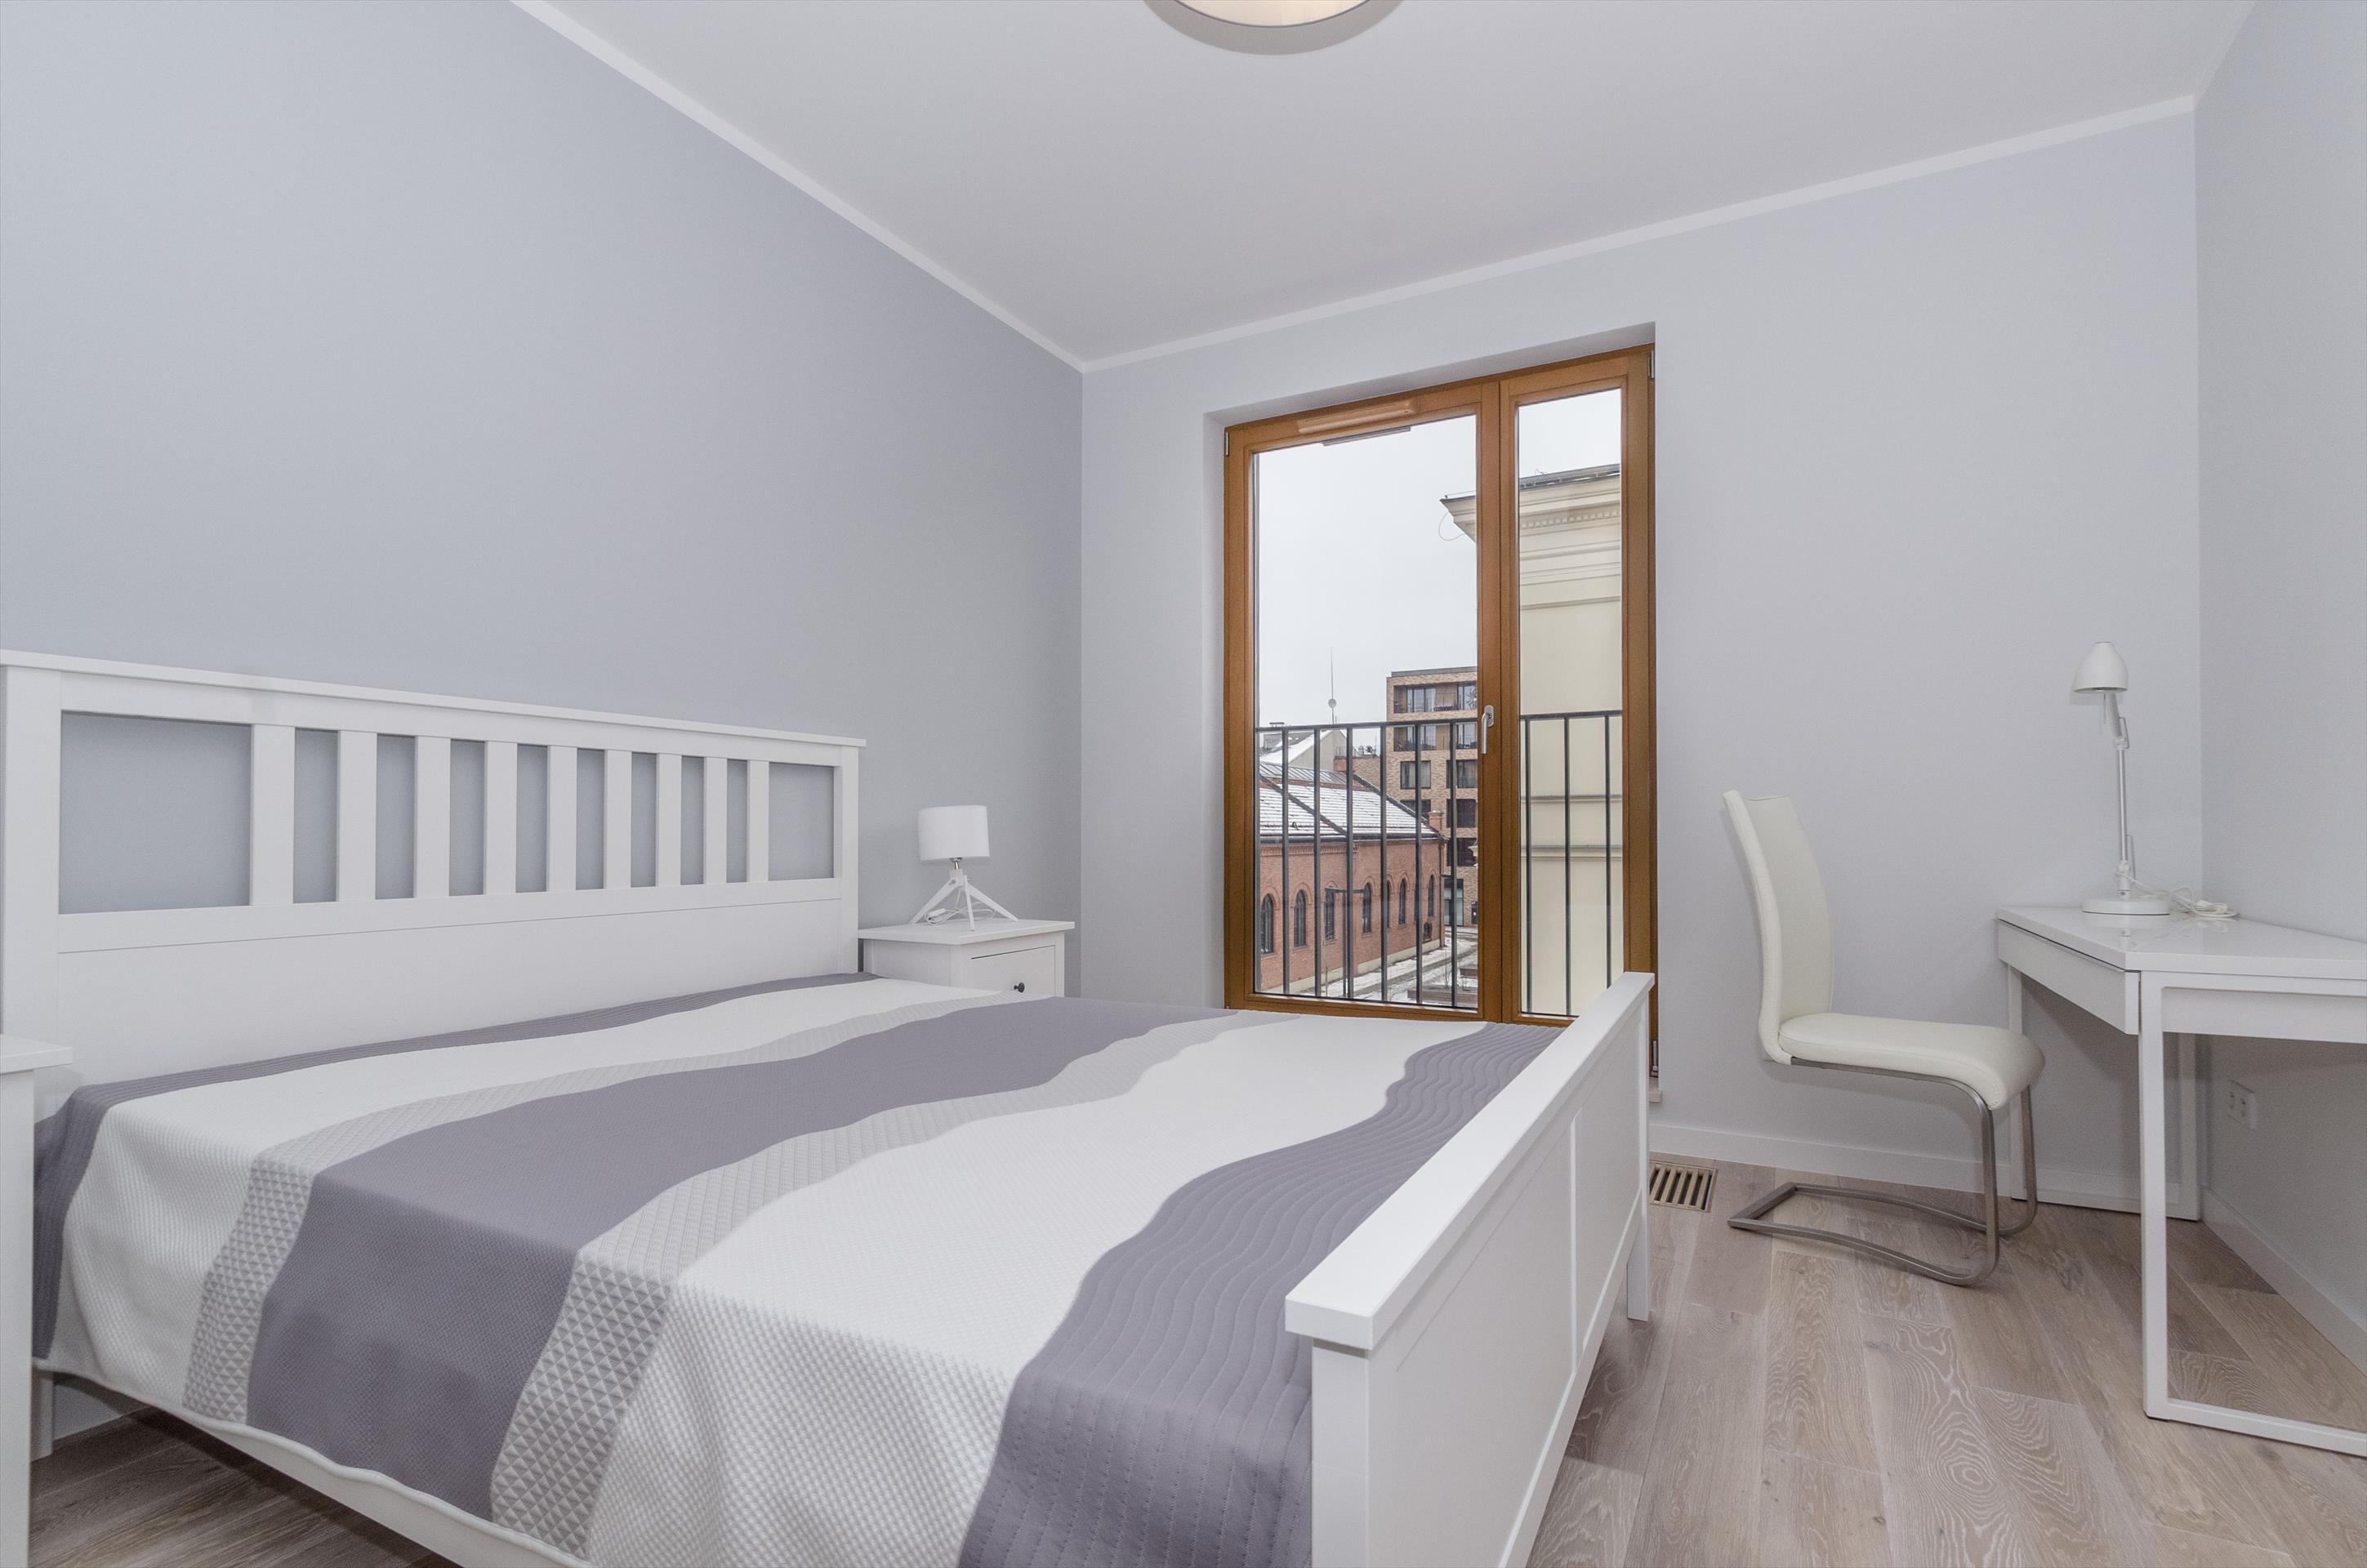 Capri (Metropolitan D) Apartment in Browar Lubicz in Krakow Old Town, One bedroom apartment - LANDMARK APARTMENTS